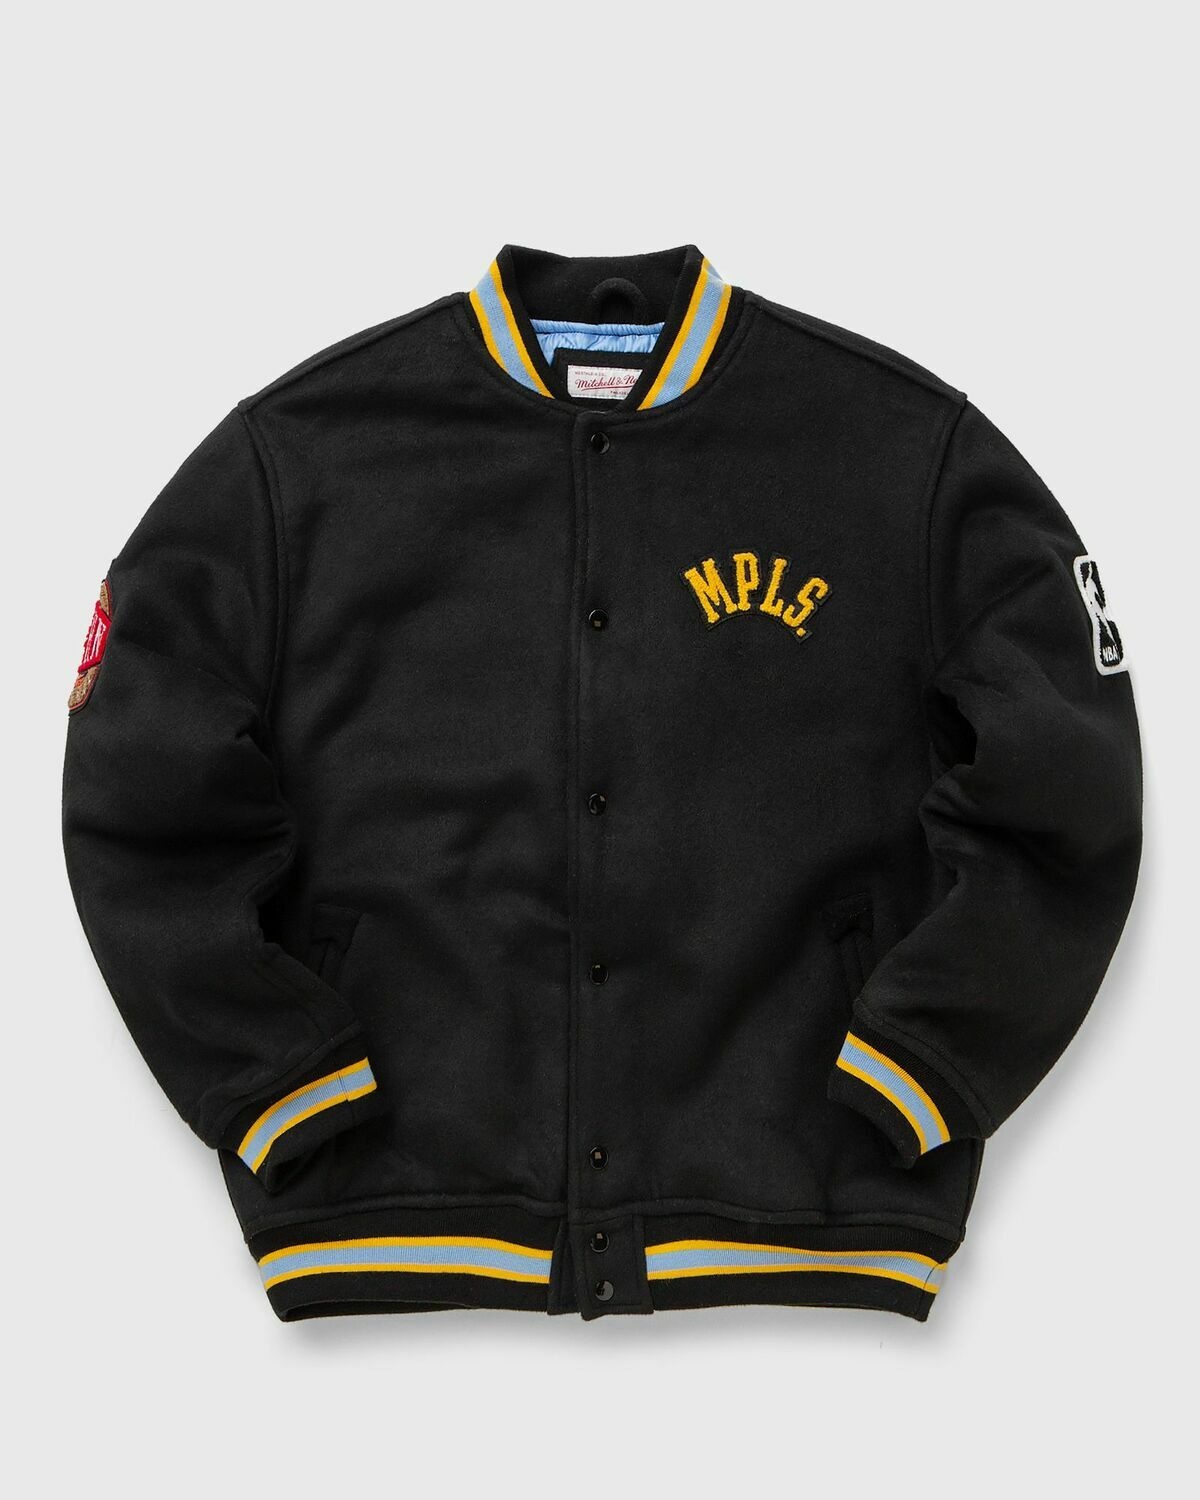 Mitchell & Ness Nba Minneapolis Lakers Hardwood Classics Wool Varsity Jacket Black - Mens - College Jackets